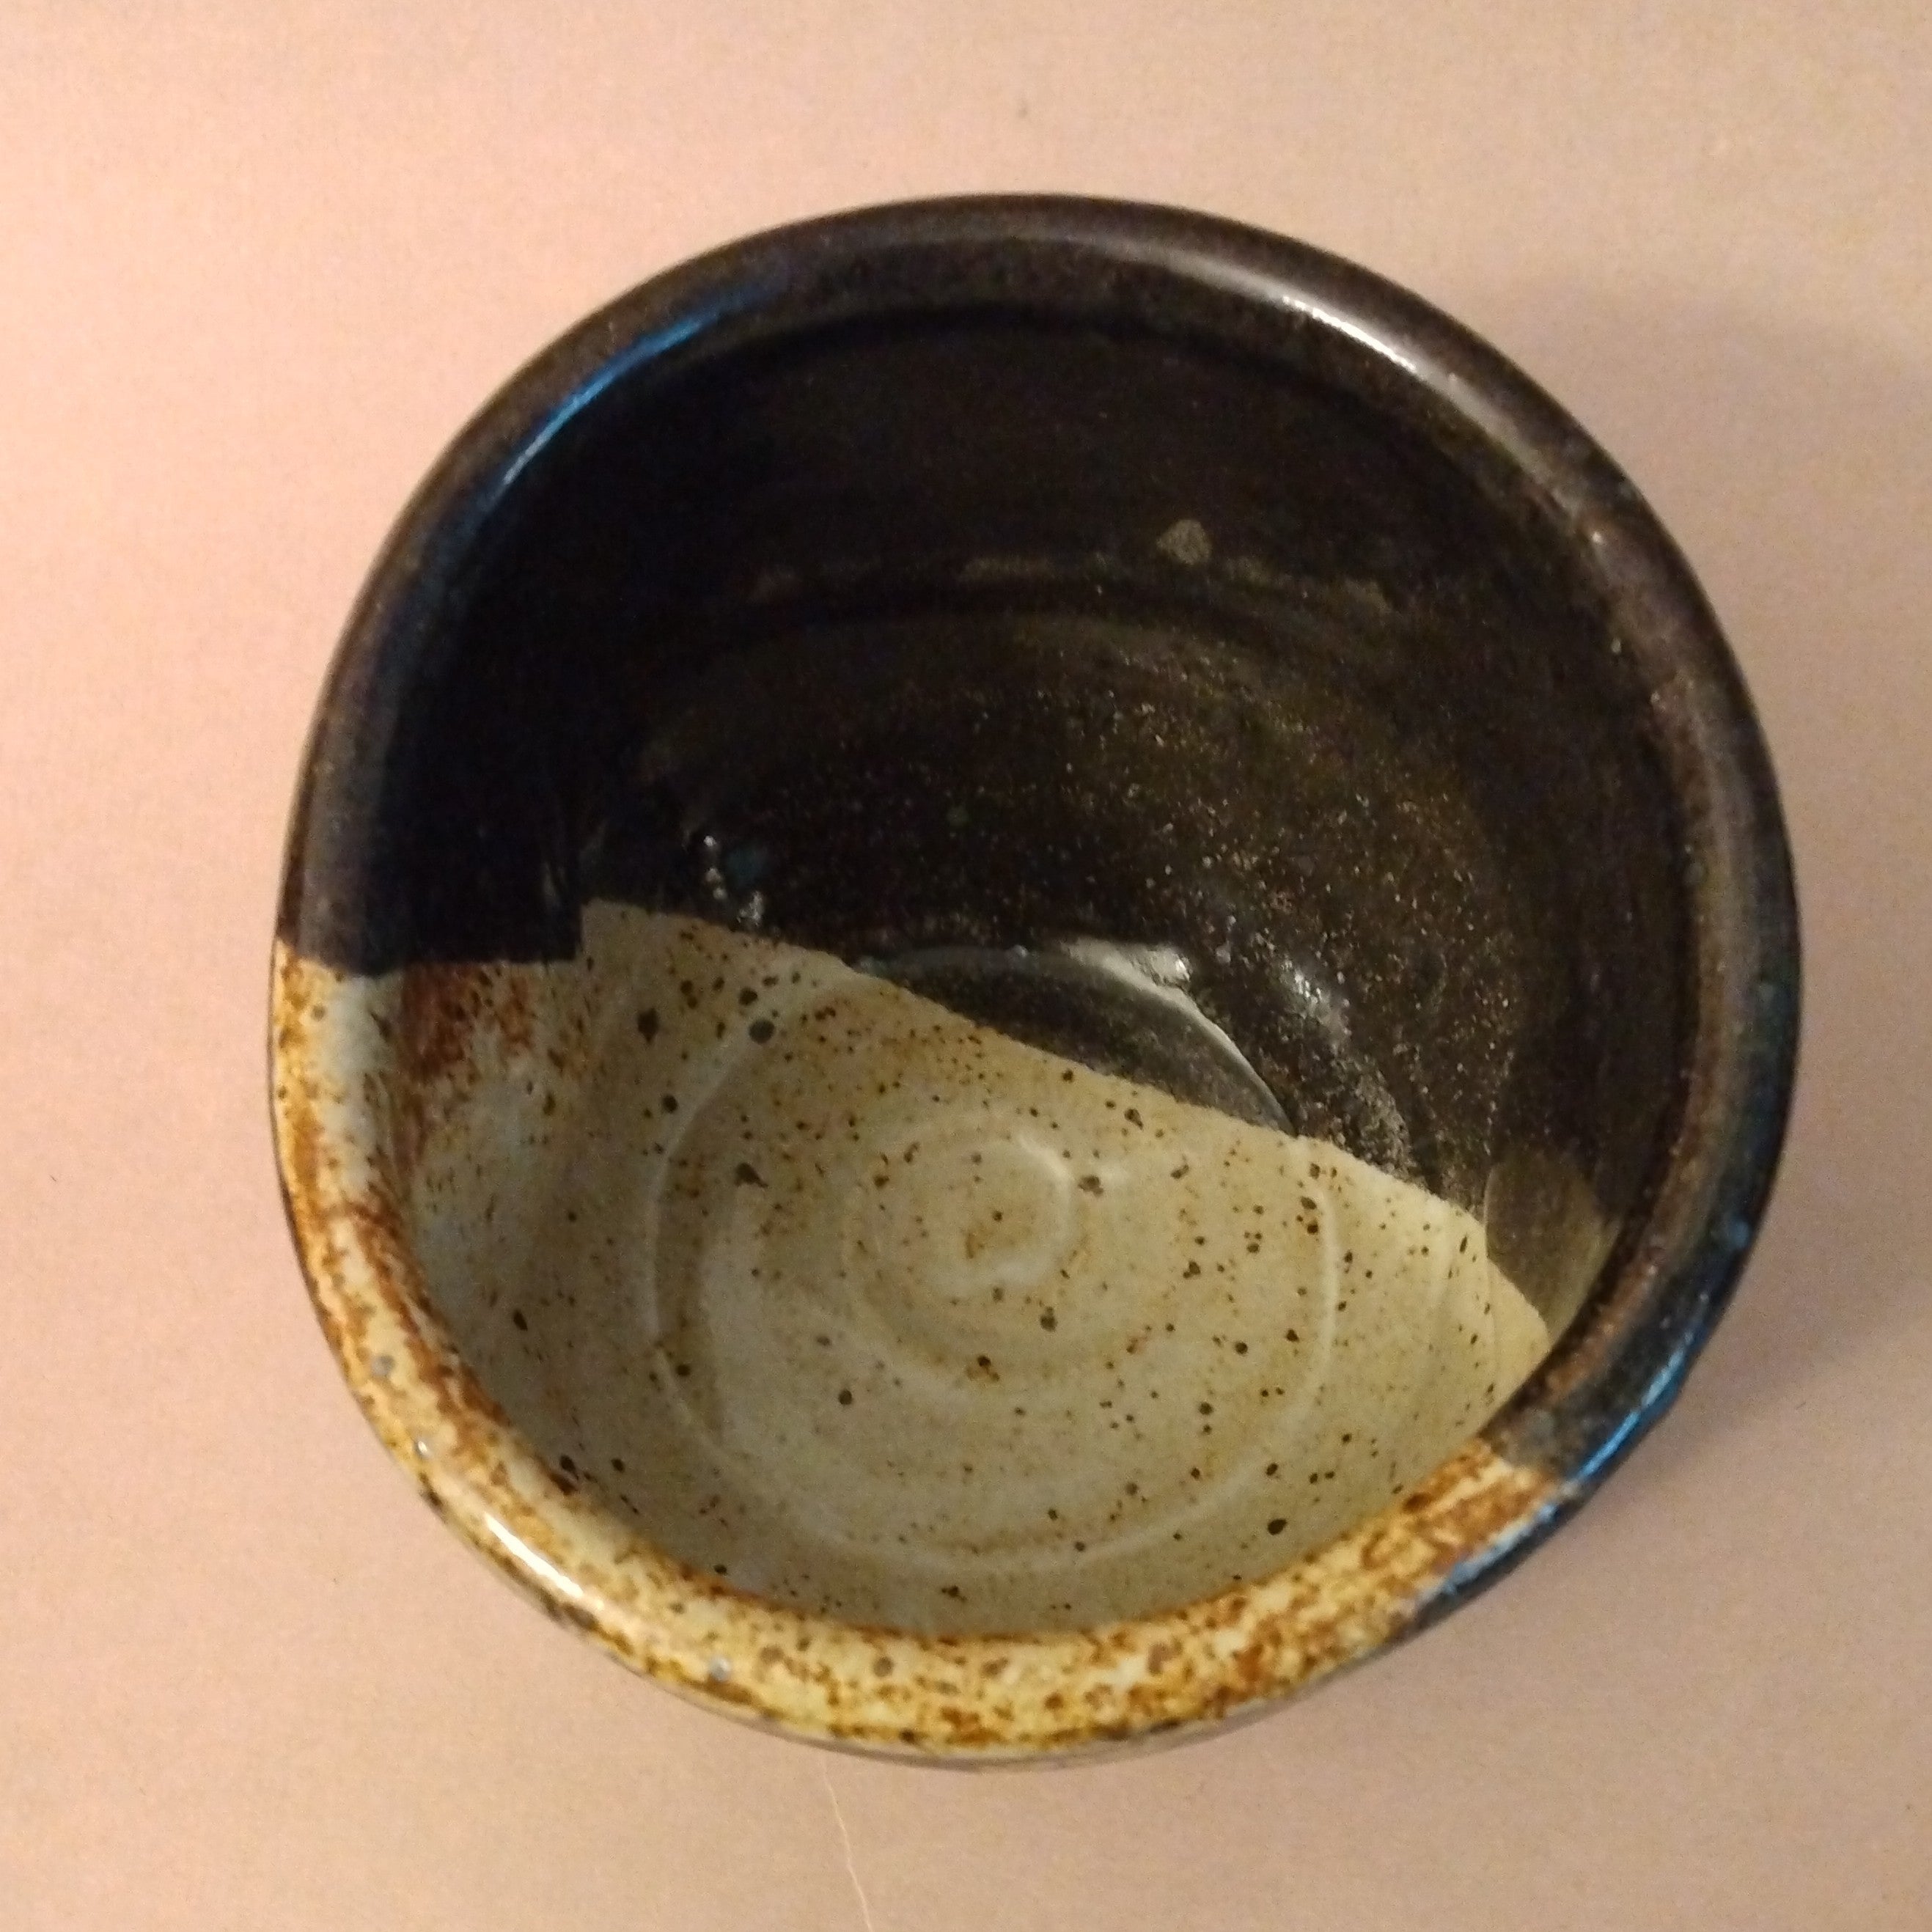 20% to Wajima Earthquake Relief - Oribe Matcha Chawan, Tea Bowl, Kutsu-gata (shoe-shaped), Kake-wake (split glaze) design, by Sachiko Furya